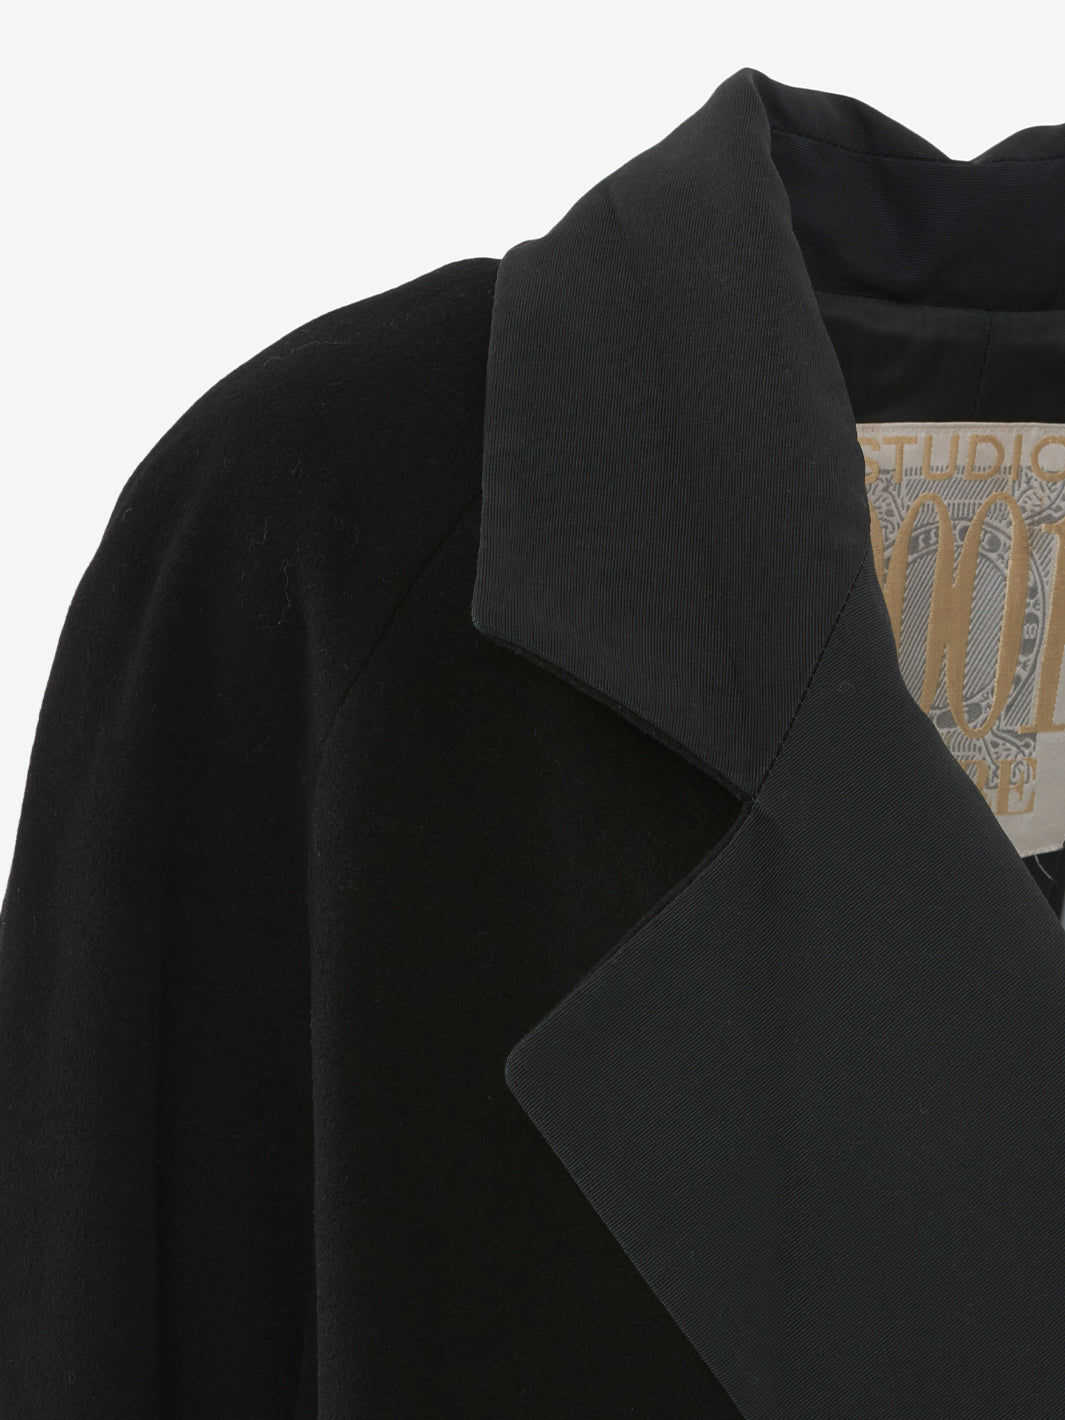 Gianfranco Ferré black wool coat, 1990s